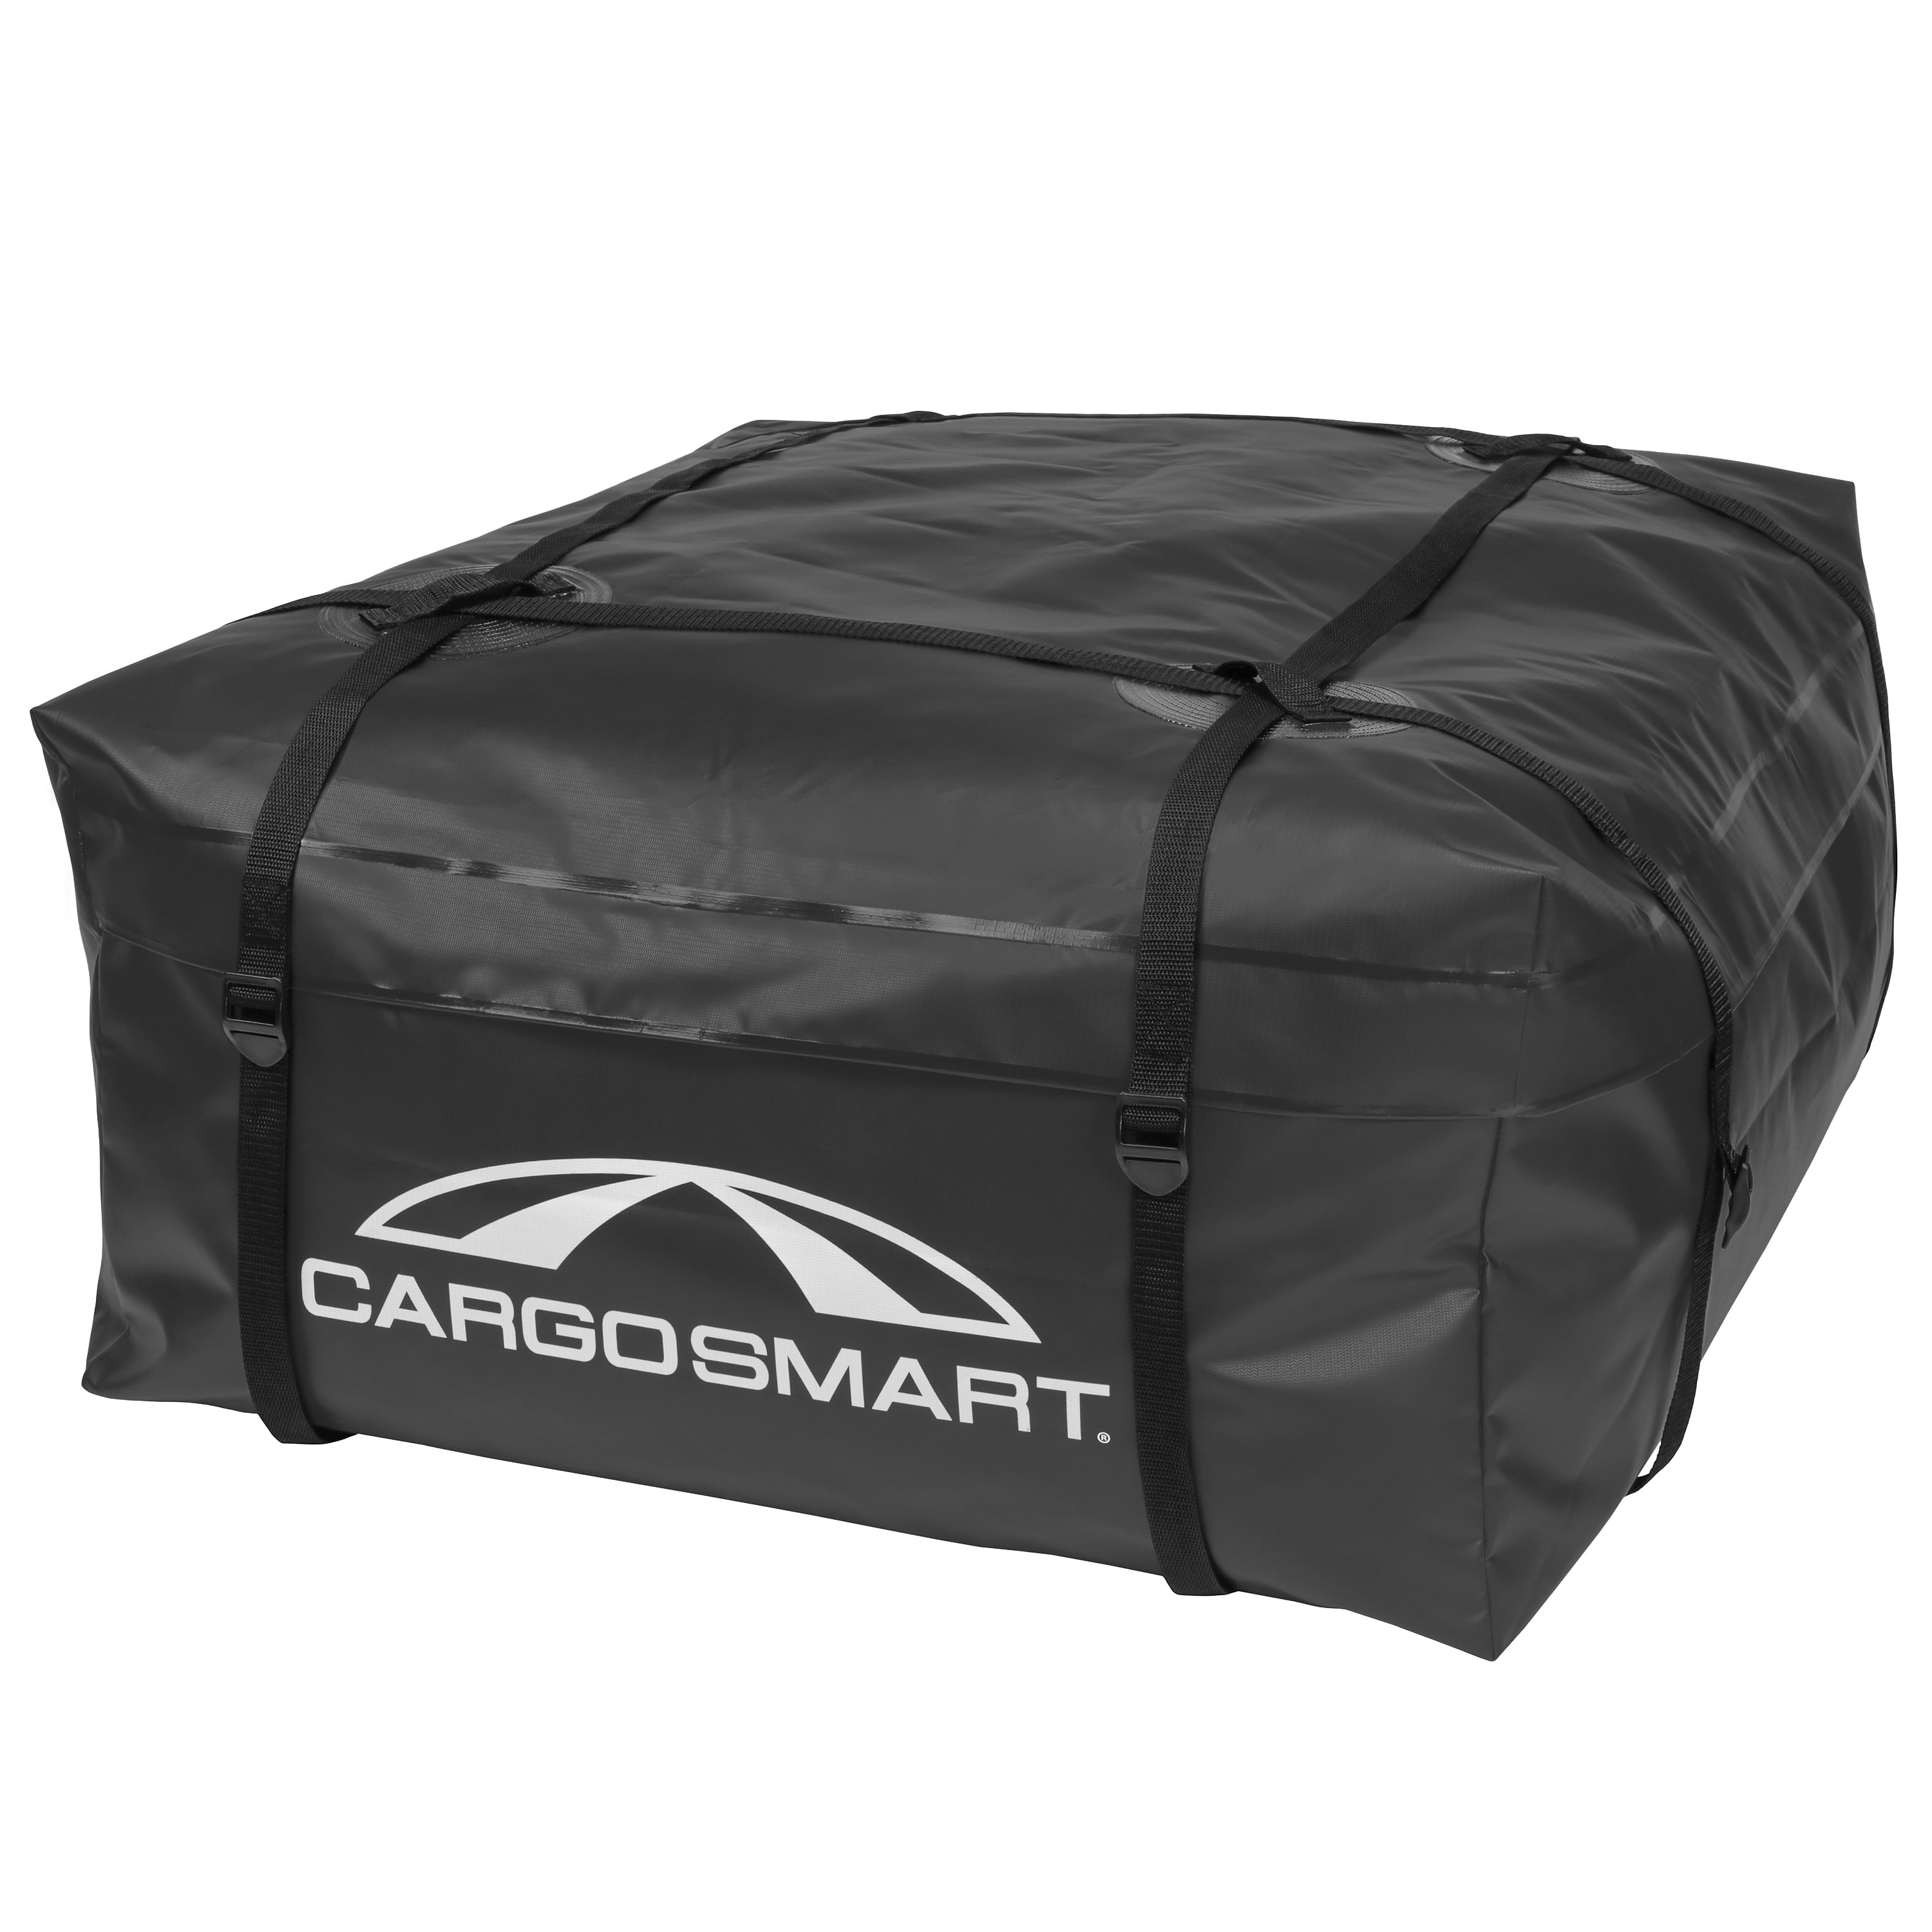 CargoSmart 10 Cubic Feet Soft Sided Car Top Carrier Bag Black, 6620